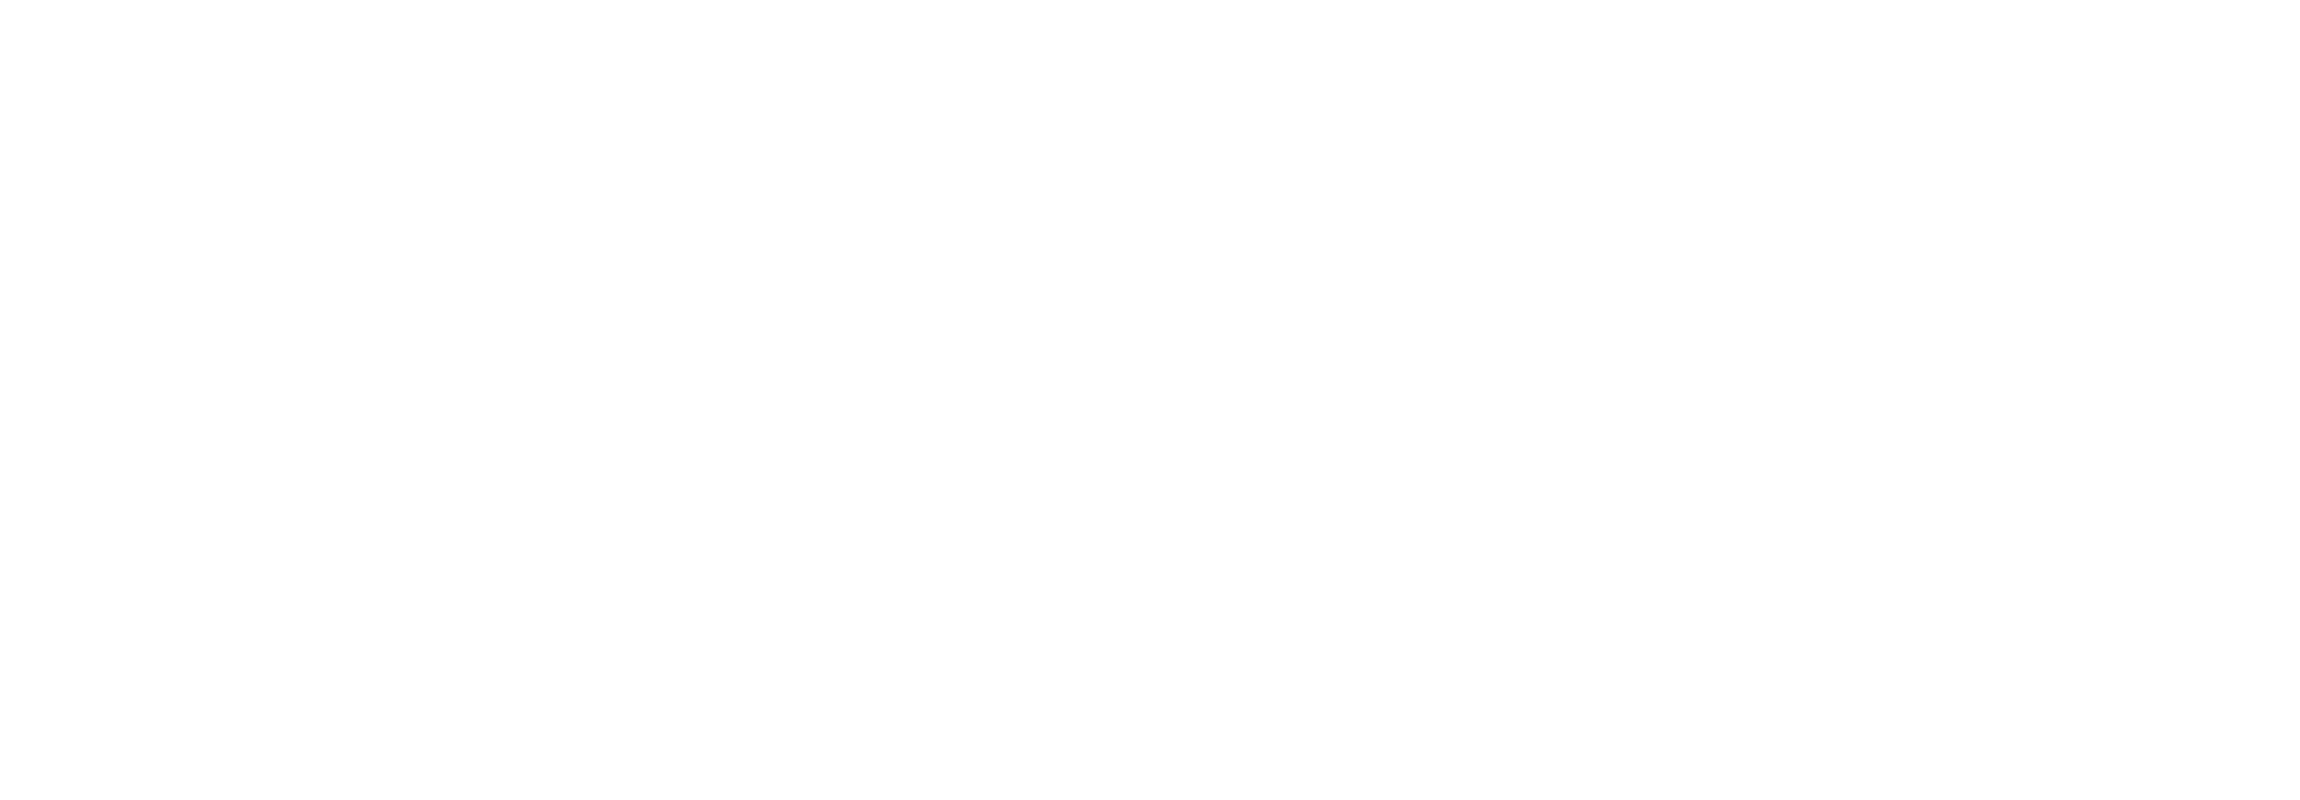 Axiom Communications – PR Work That Works